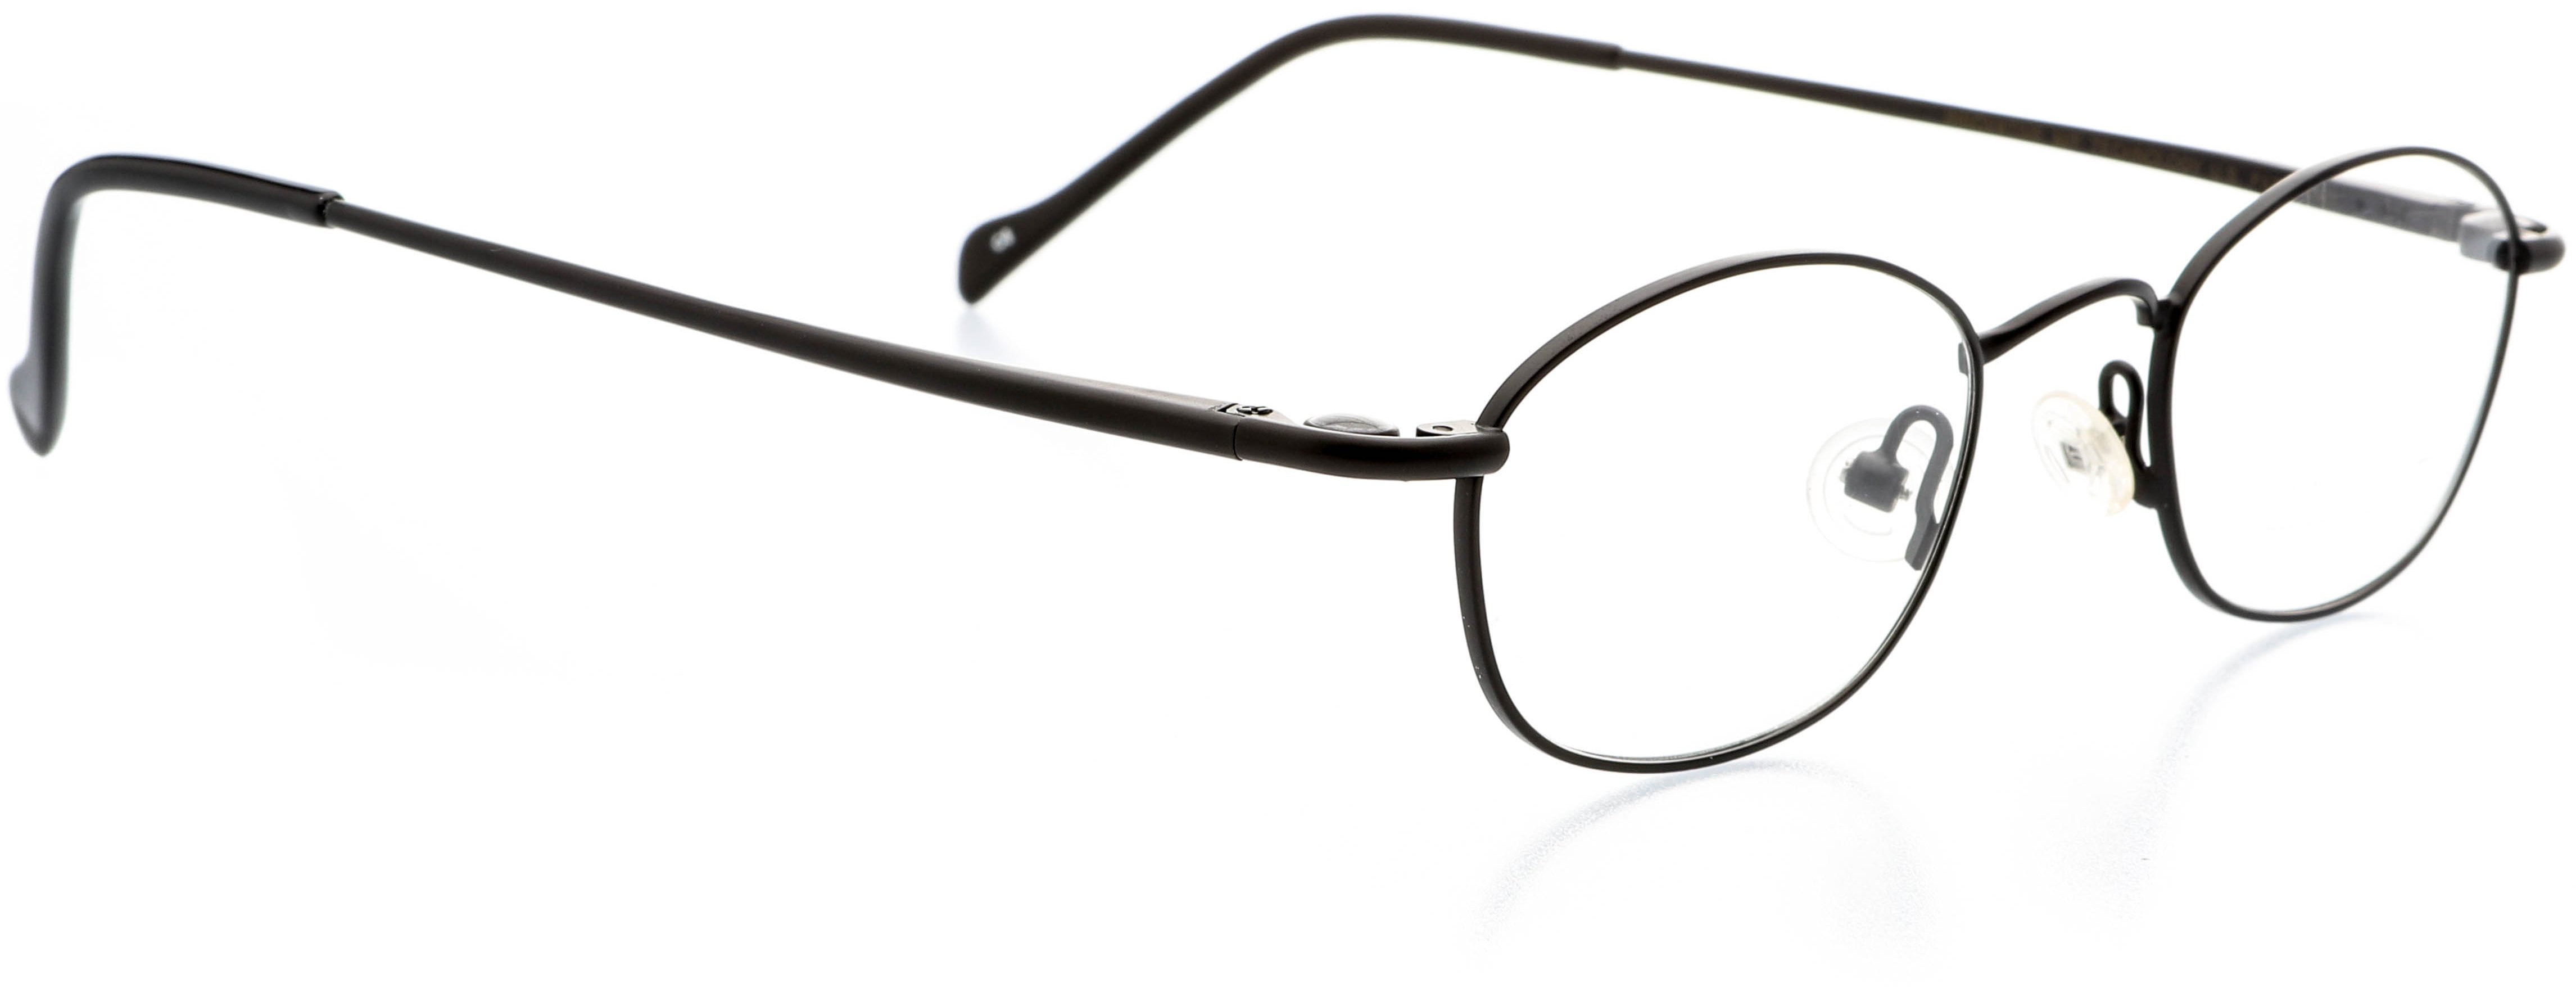 Optical Eyewear - Oval Shape, Metal Full Rim Frame - Prescription  Eyeglasses RX, Black 